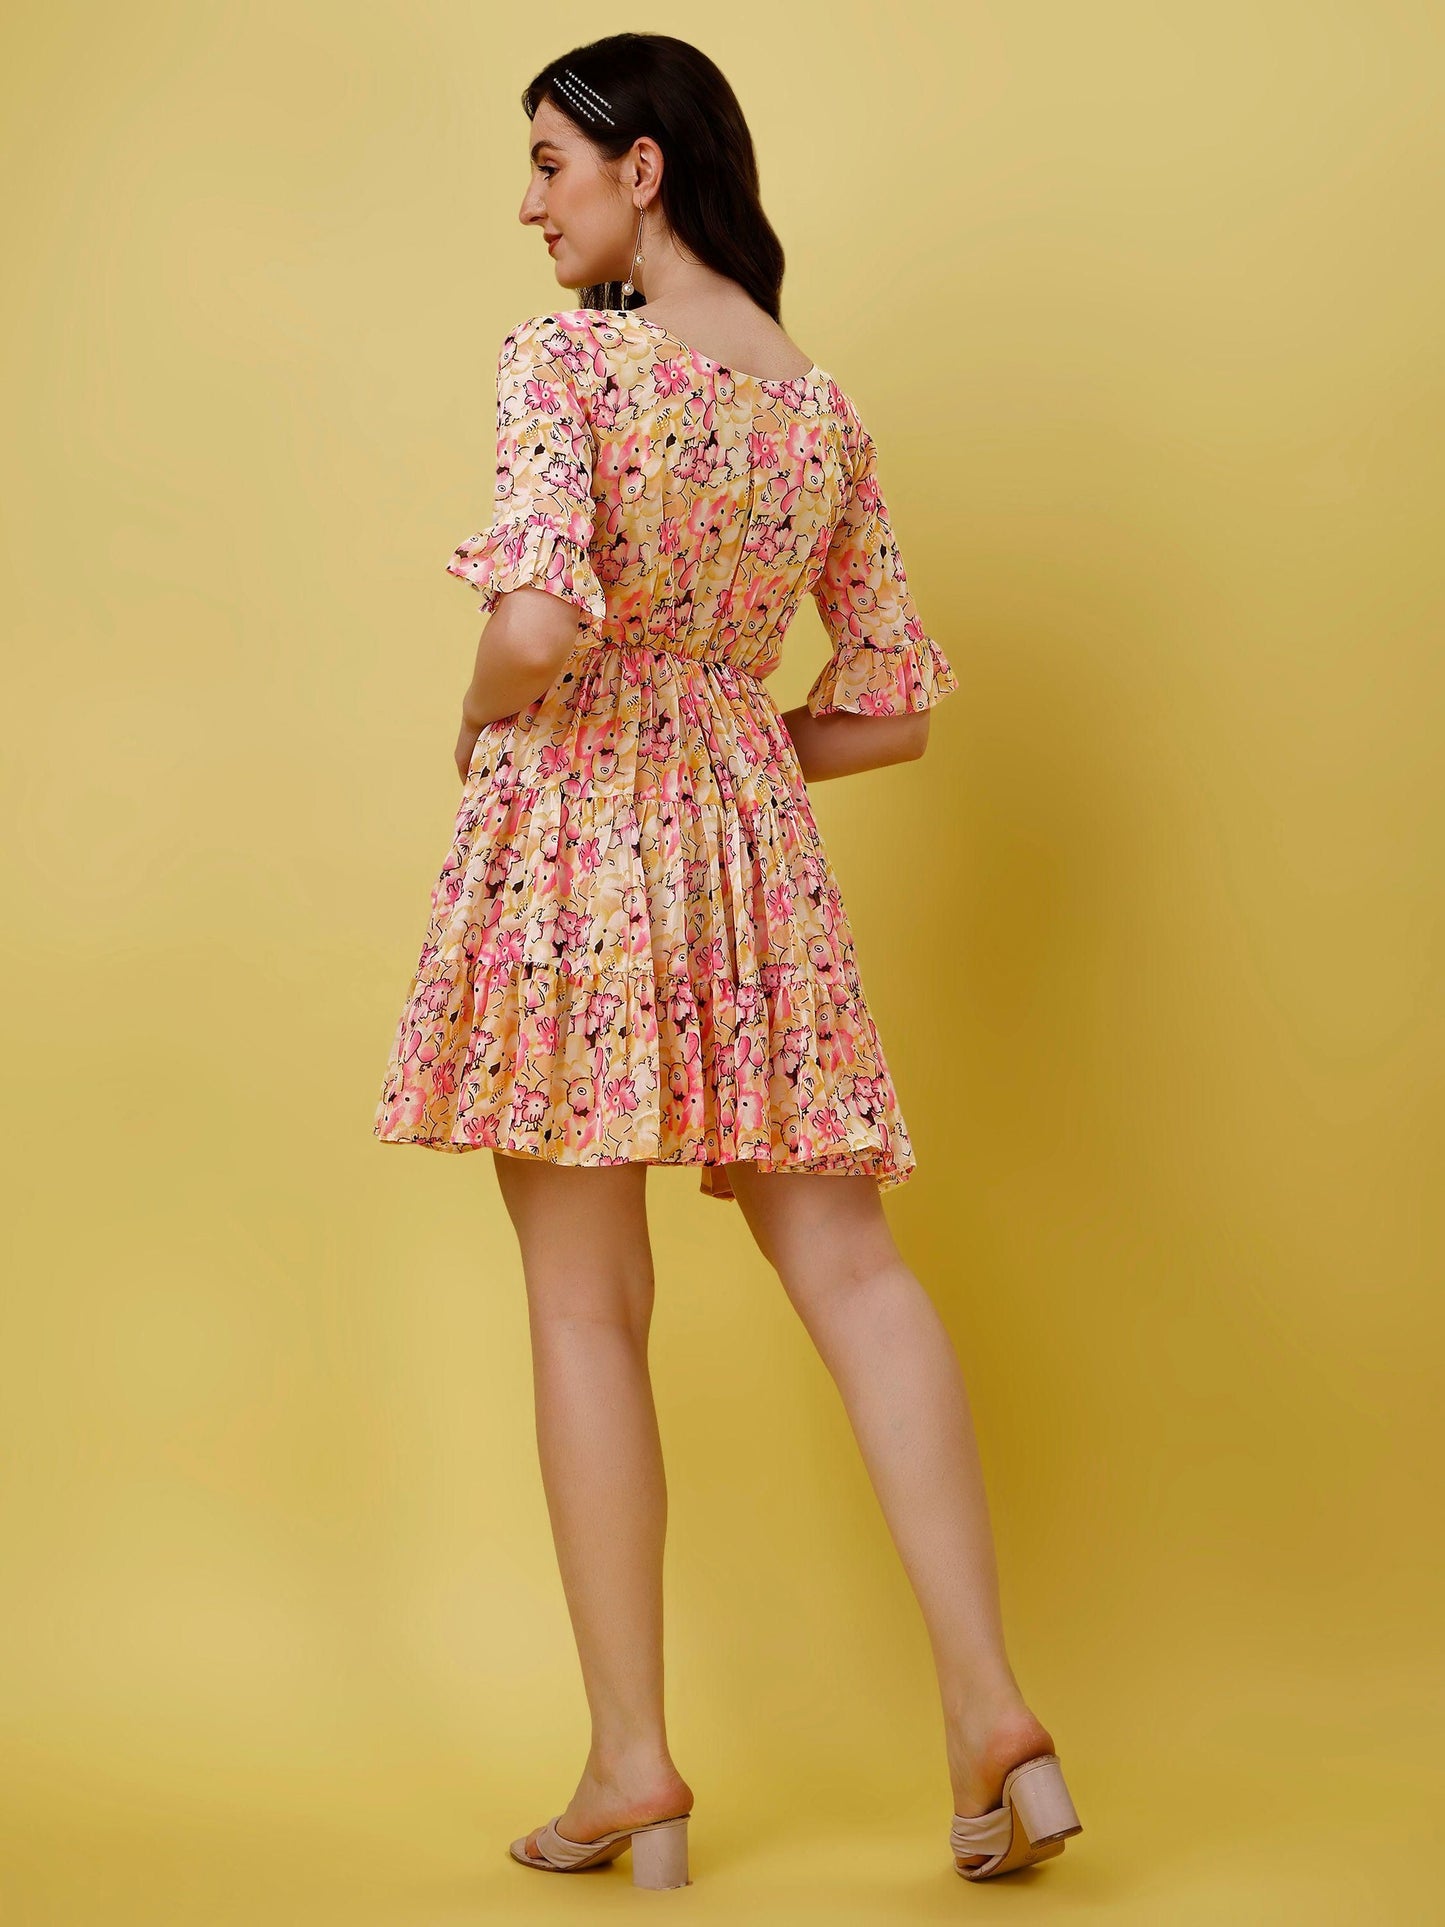 Plus Size Women's Georgette Printed A-Line Short Dress